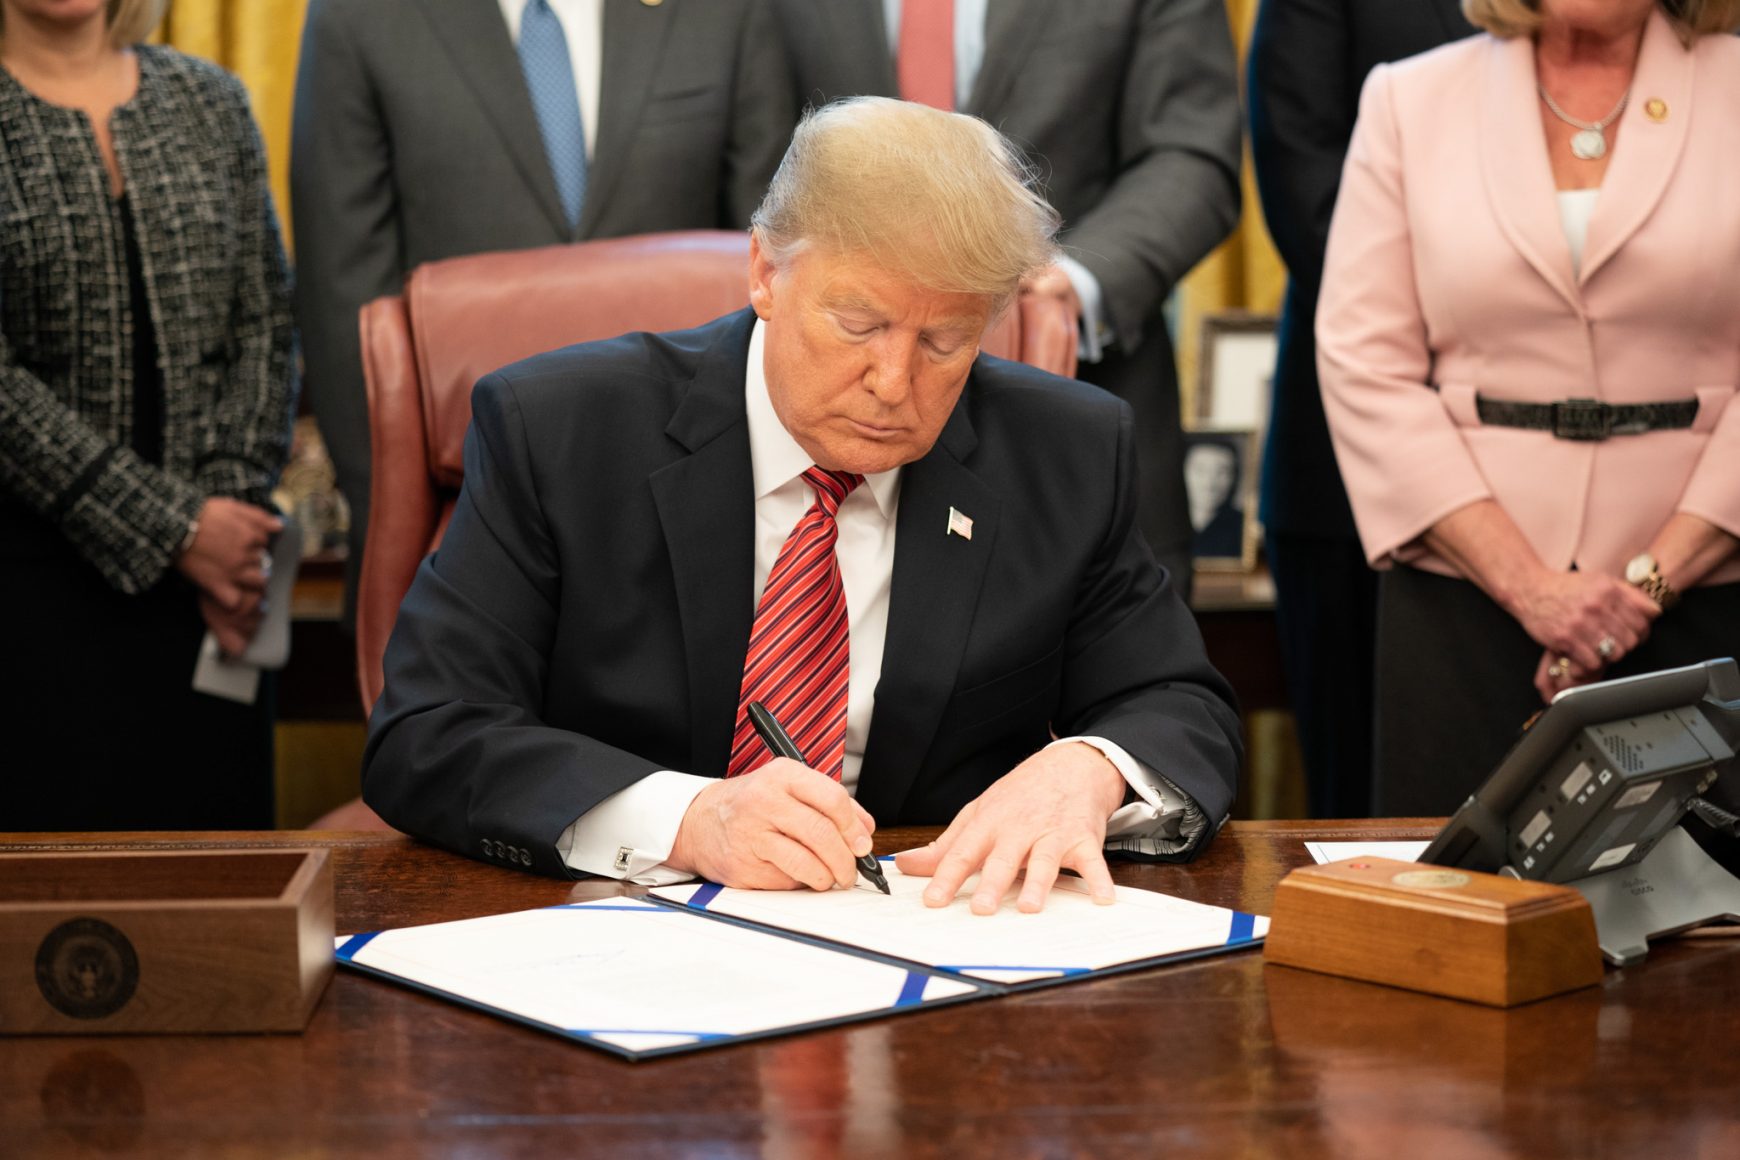 President Trump signing an executive order